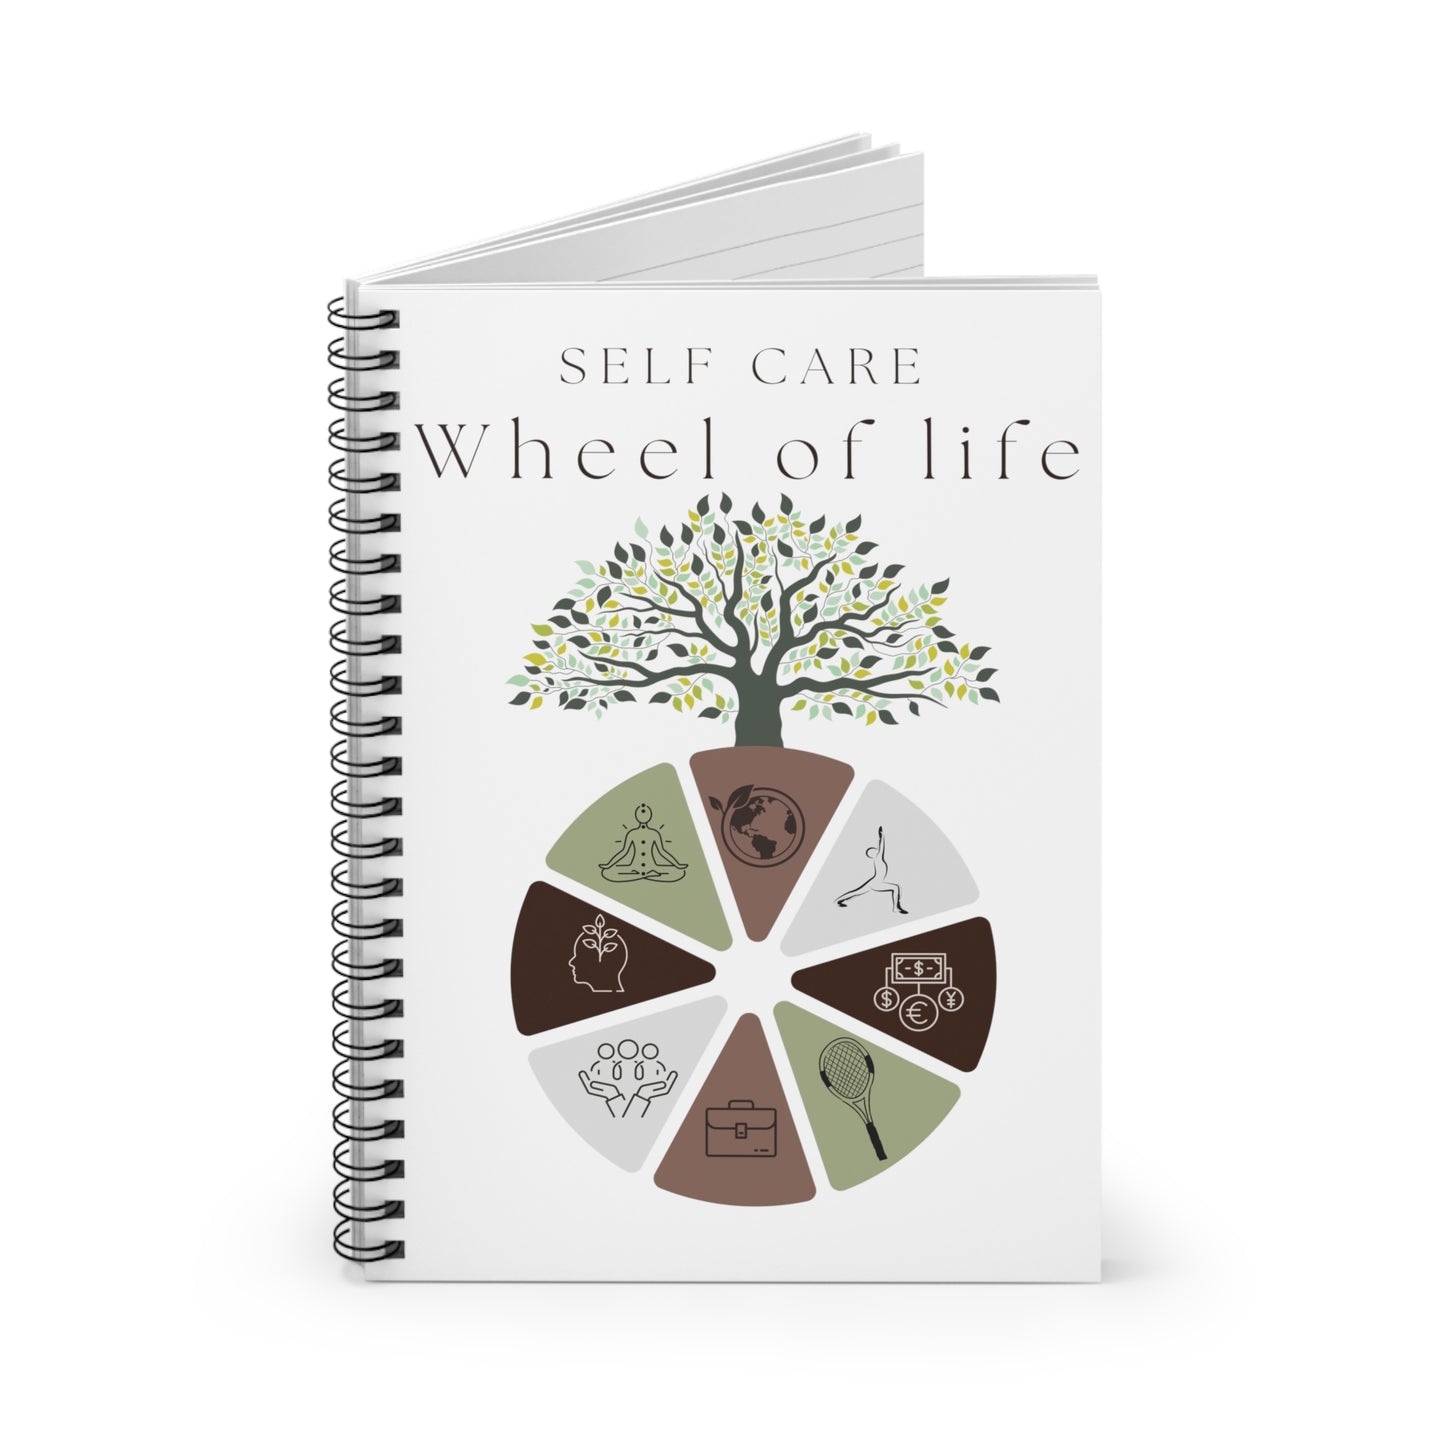 Wheel of Life Spiral Notebook